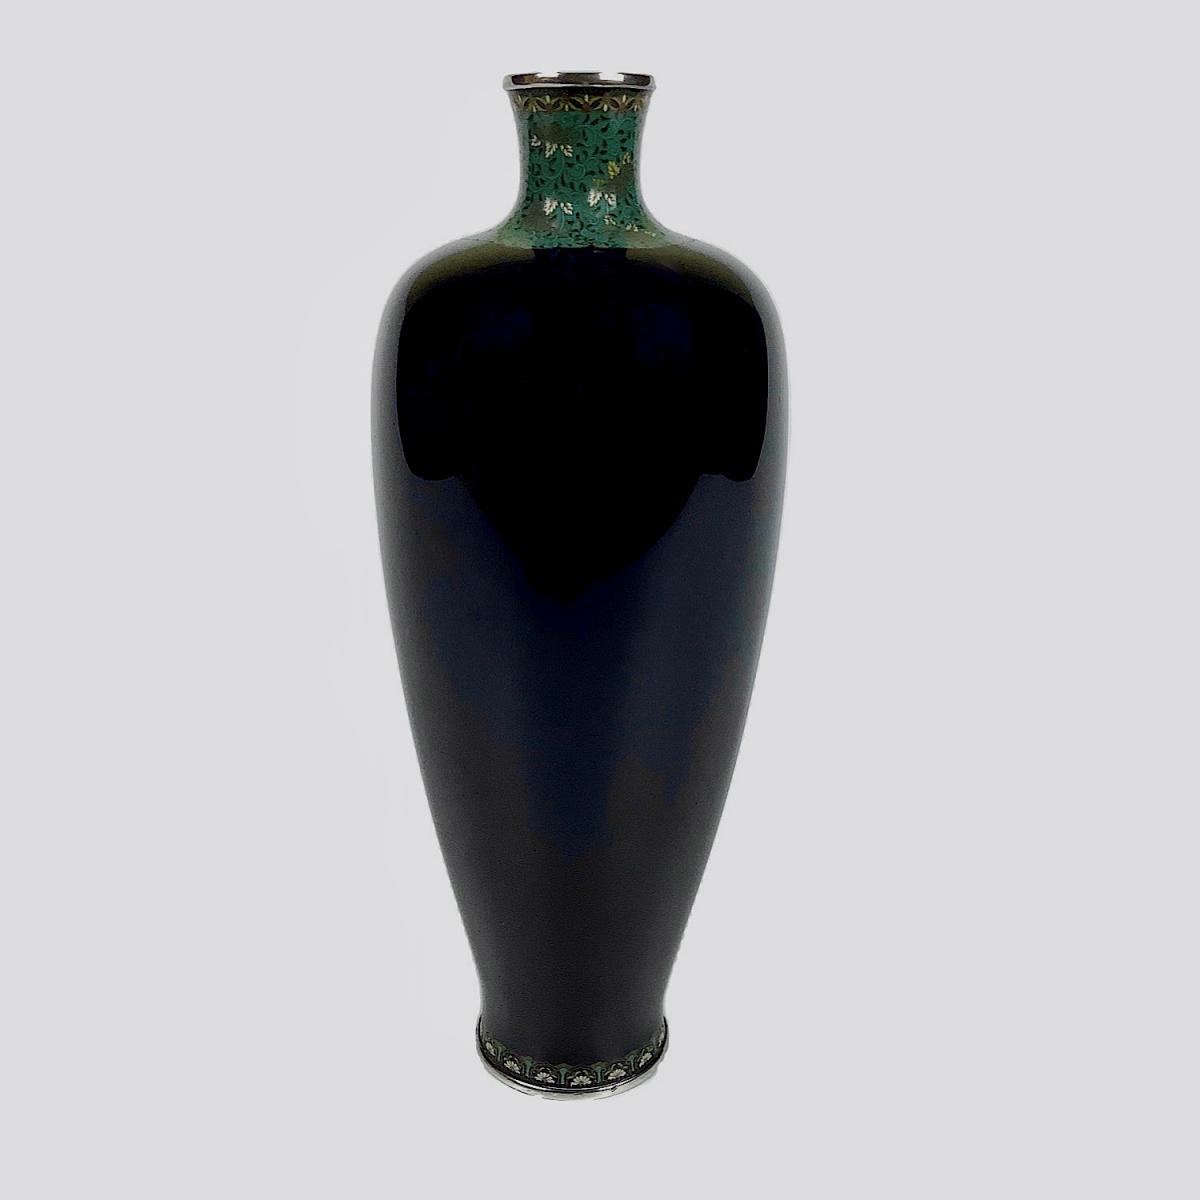 Japanese cloisonné enamel vase signed Kin'unken zo (Inaba Nanaho Studio-Kyoto), Meiji Period.